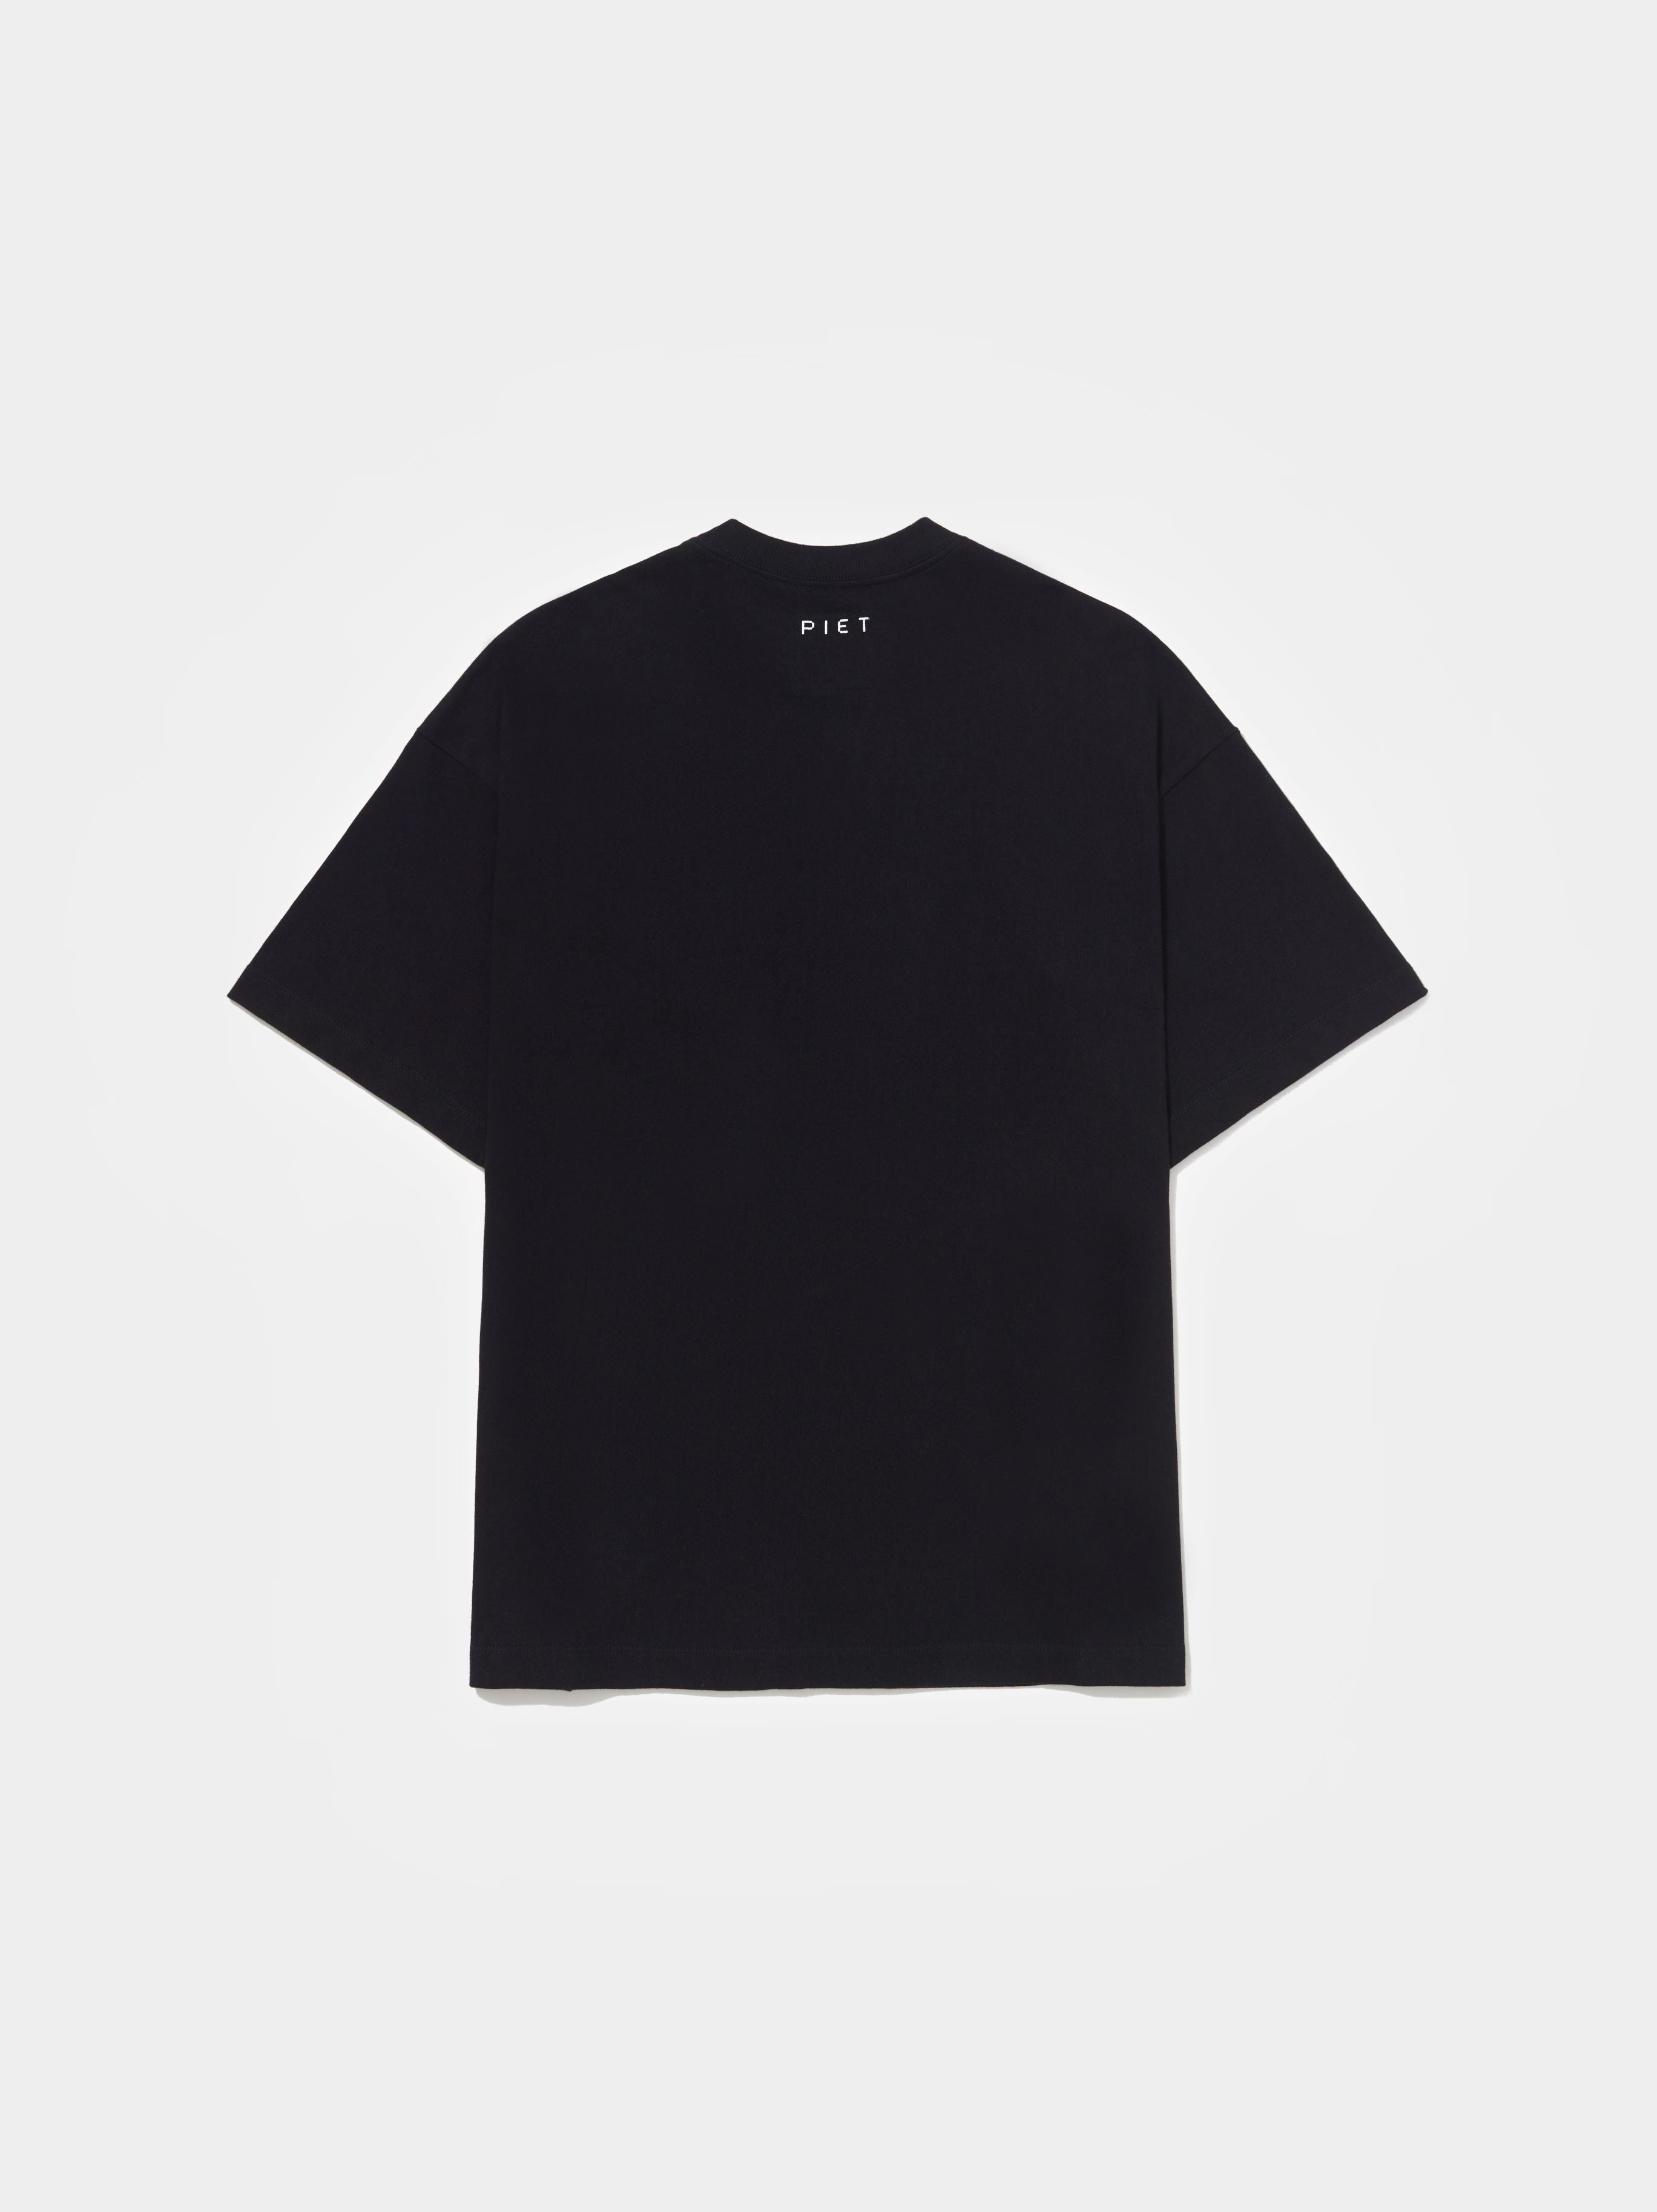 oakley × piet ソフトウェア フレーム Tシャツ ブラック　LサイズソフトウェアフレームTシャツ